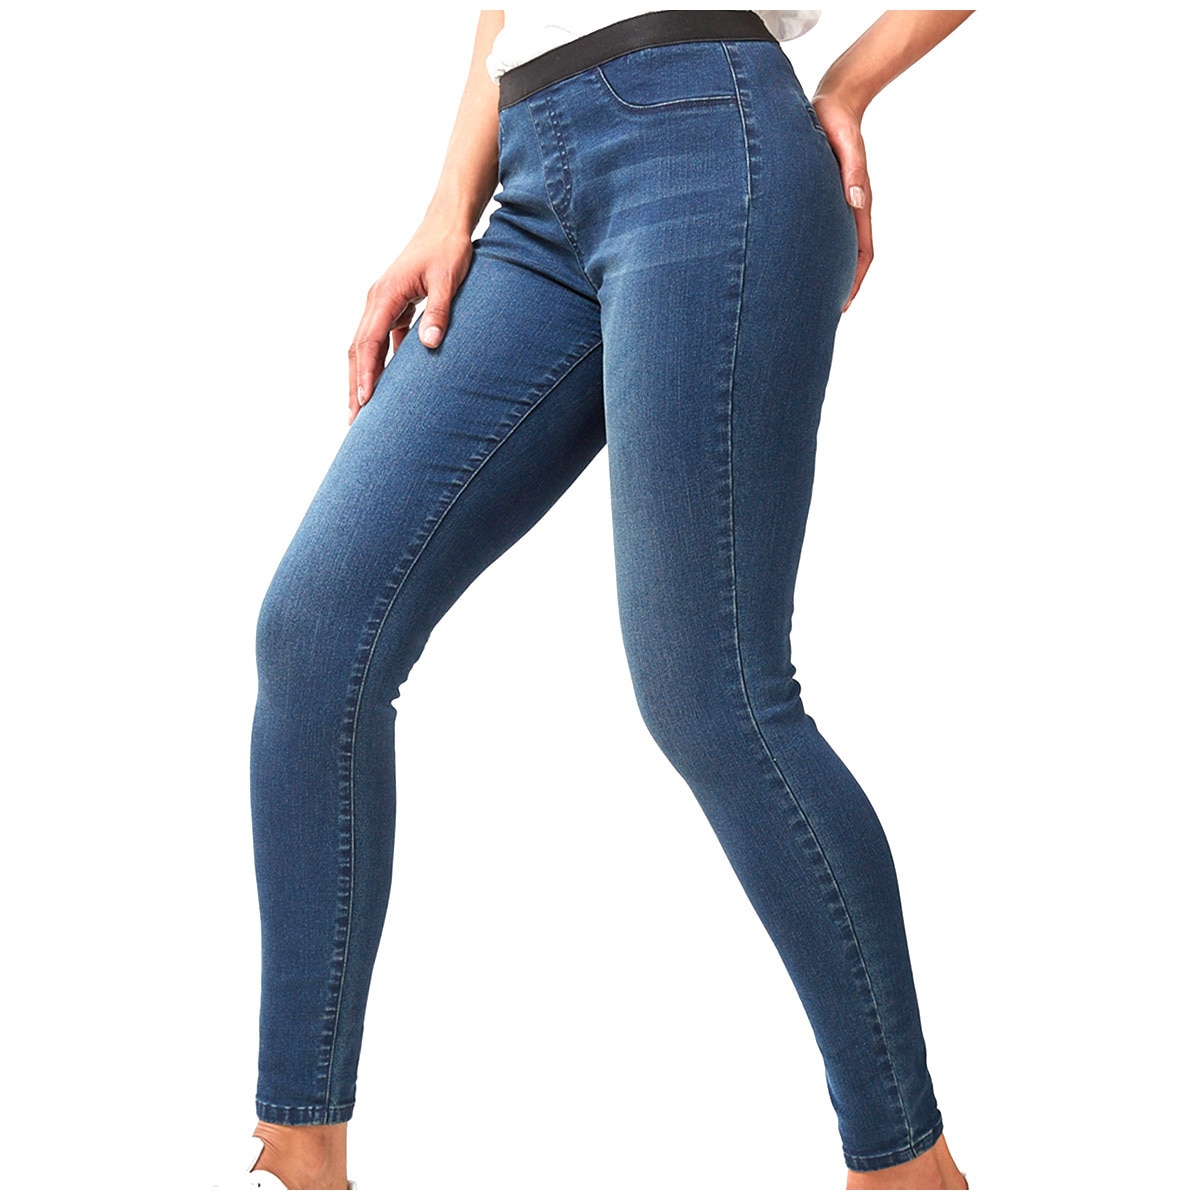 jegging jeans for women